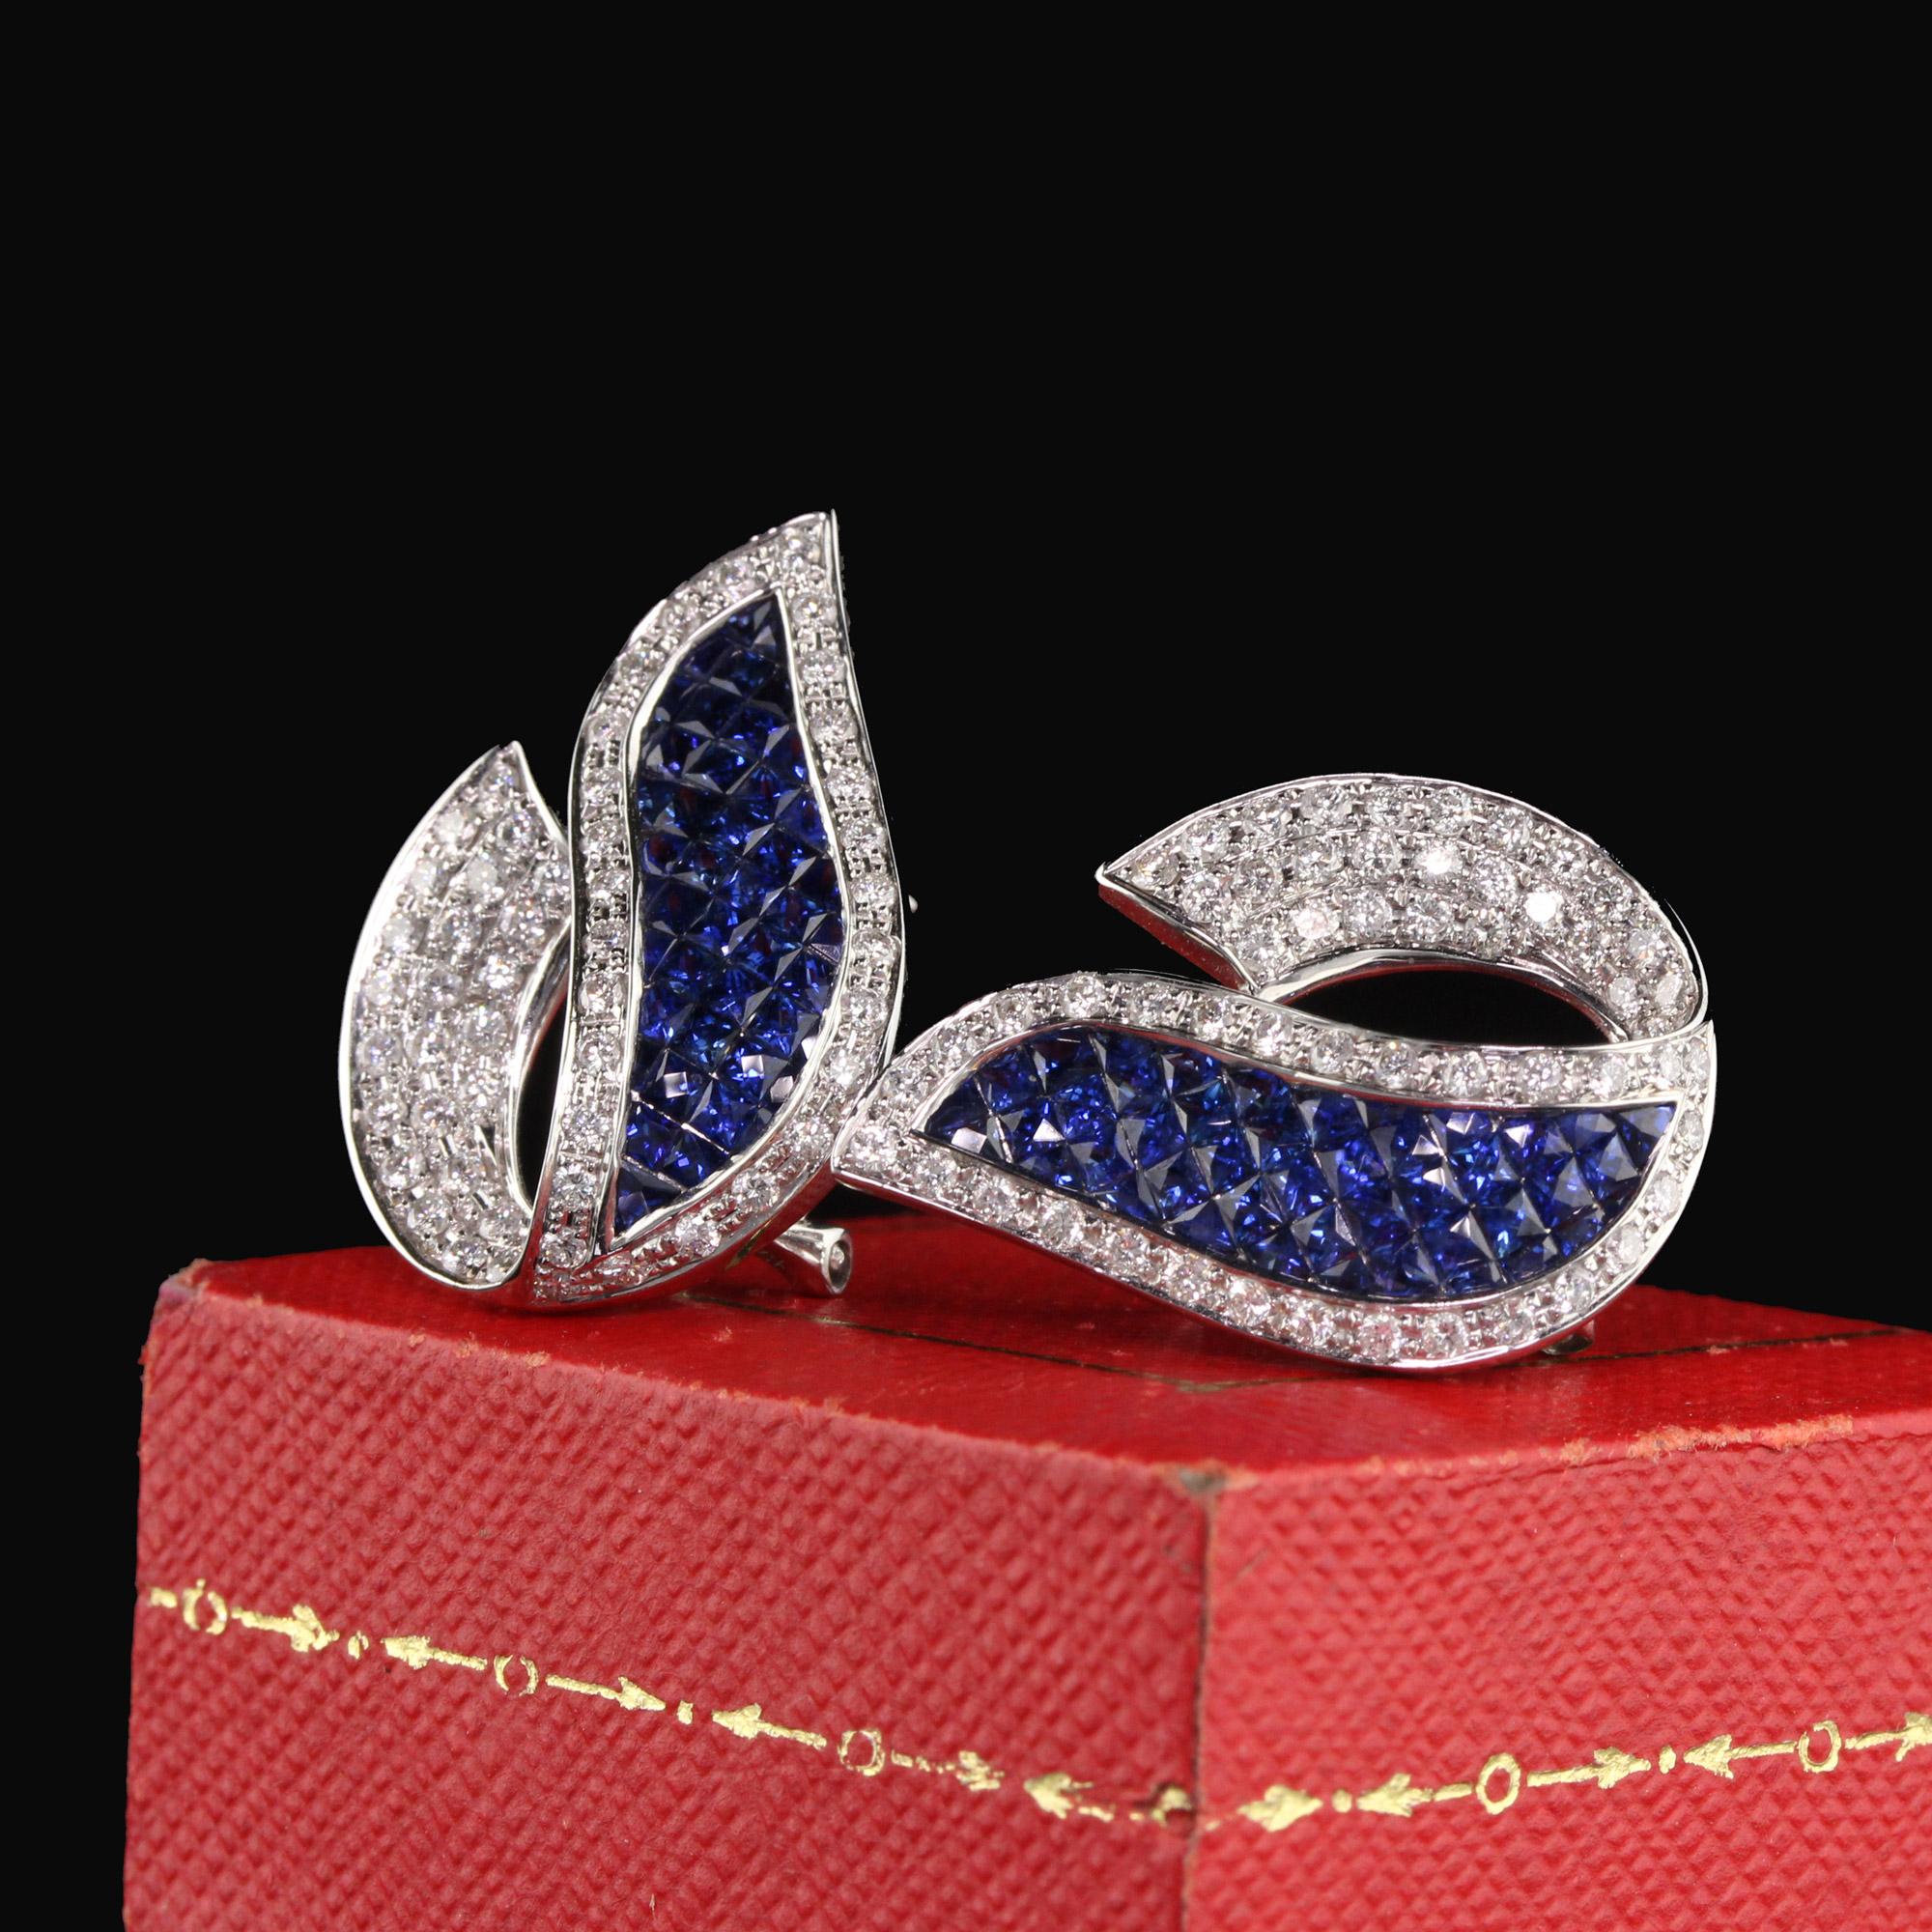 Modern Vintage Estate 18 Karat White Gold Diamond and Sapphire Earrings